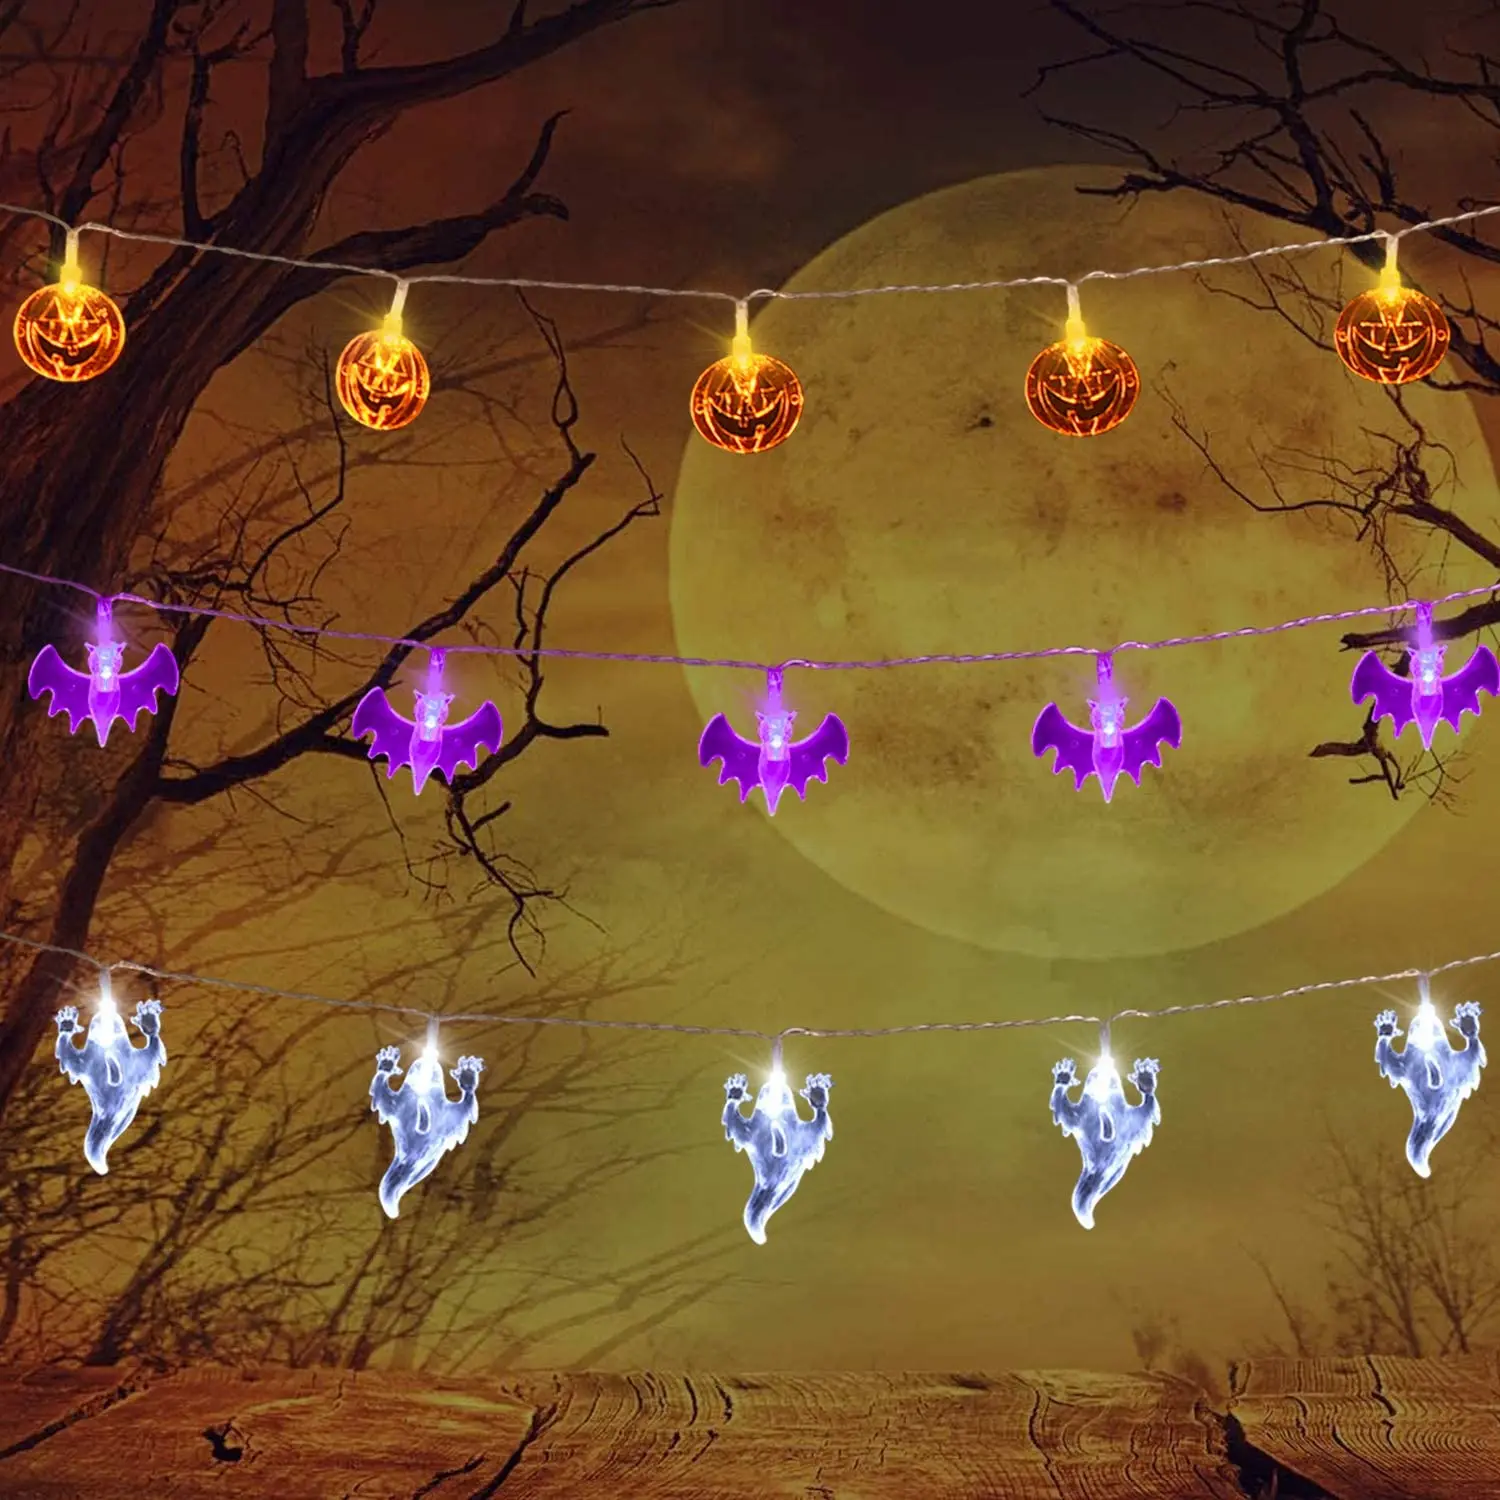 

Set of 3 Halloween Lights (20 LEDs Orange Pumpkins, Purple Bats, White Ghosts), Battery String Lights for Halloween Decorations